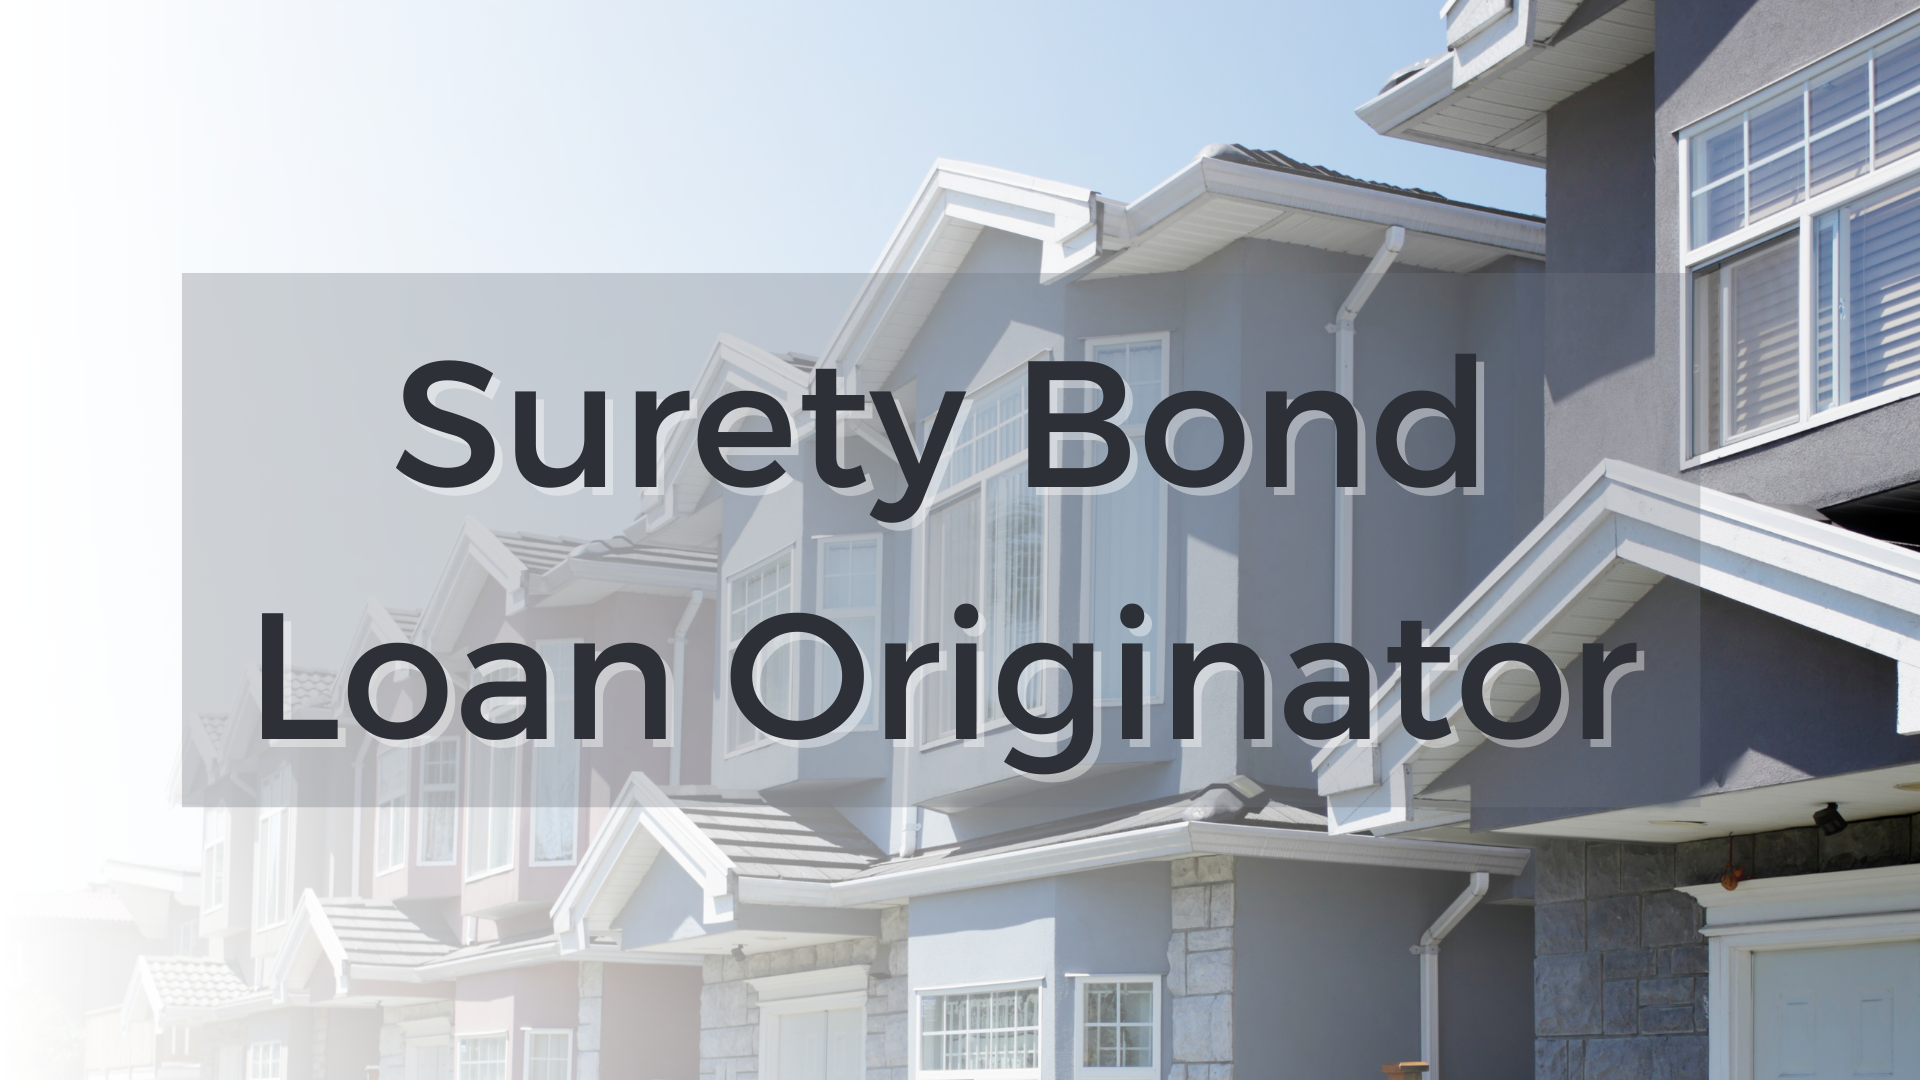 Surety Bond-Surety Bond Loan Originator